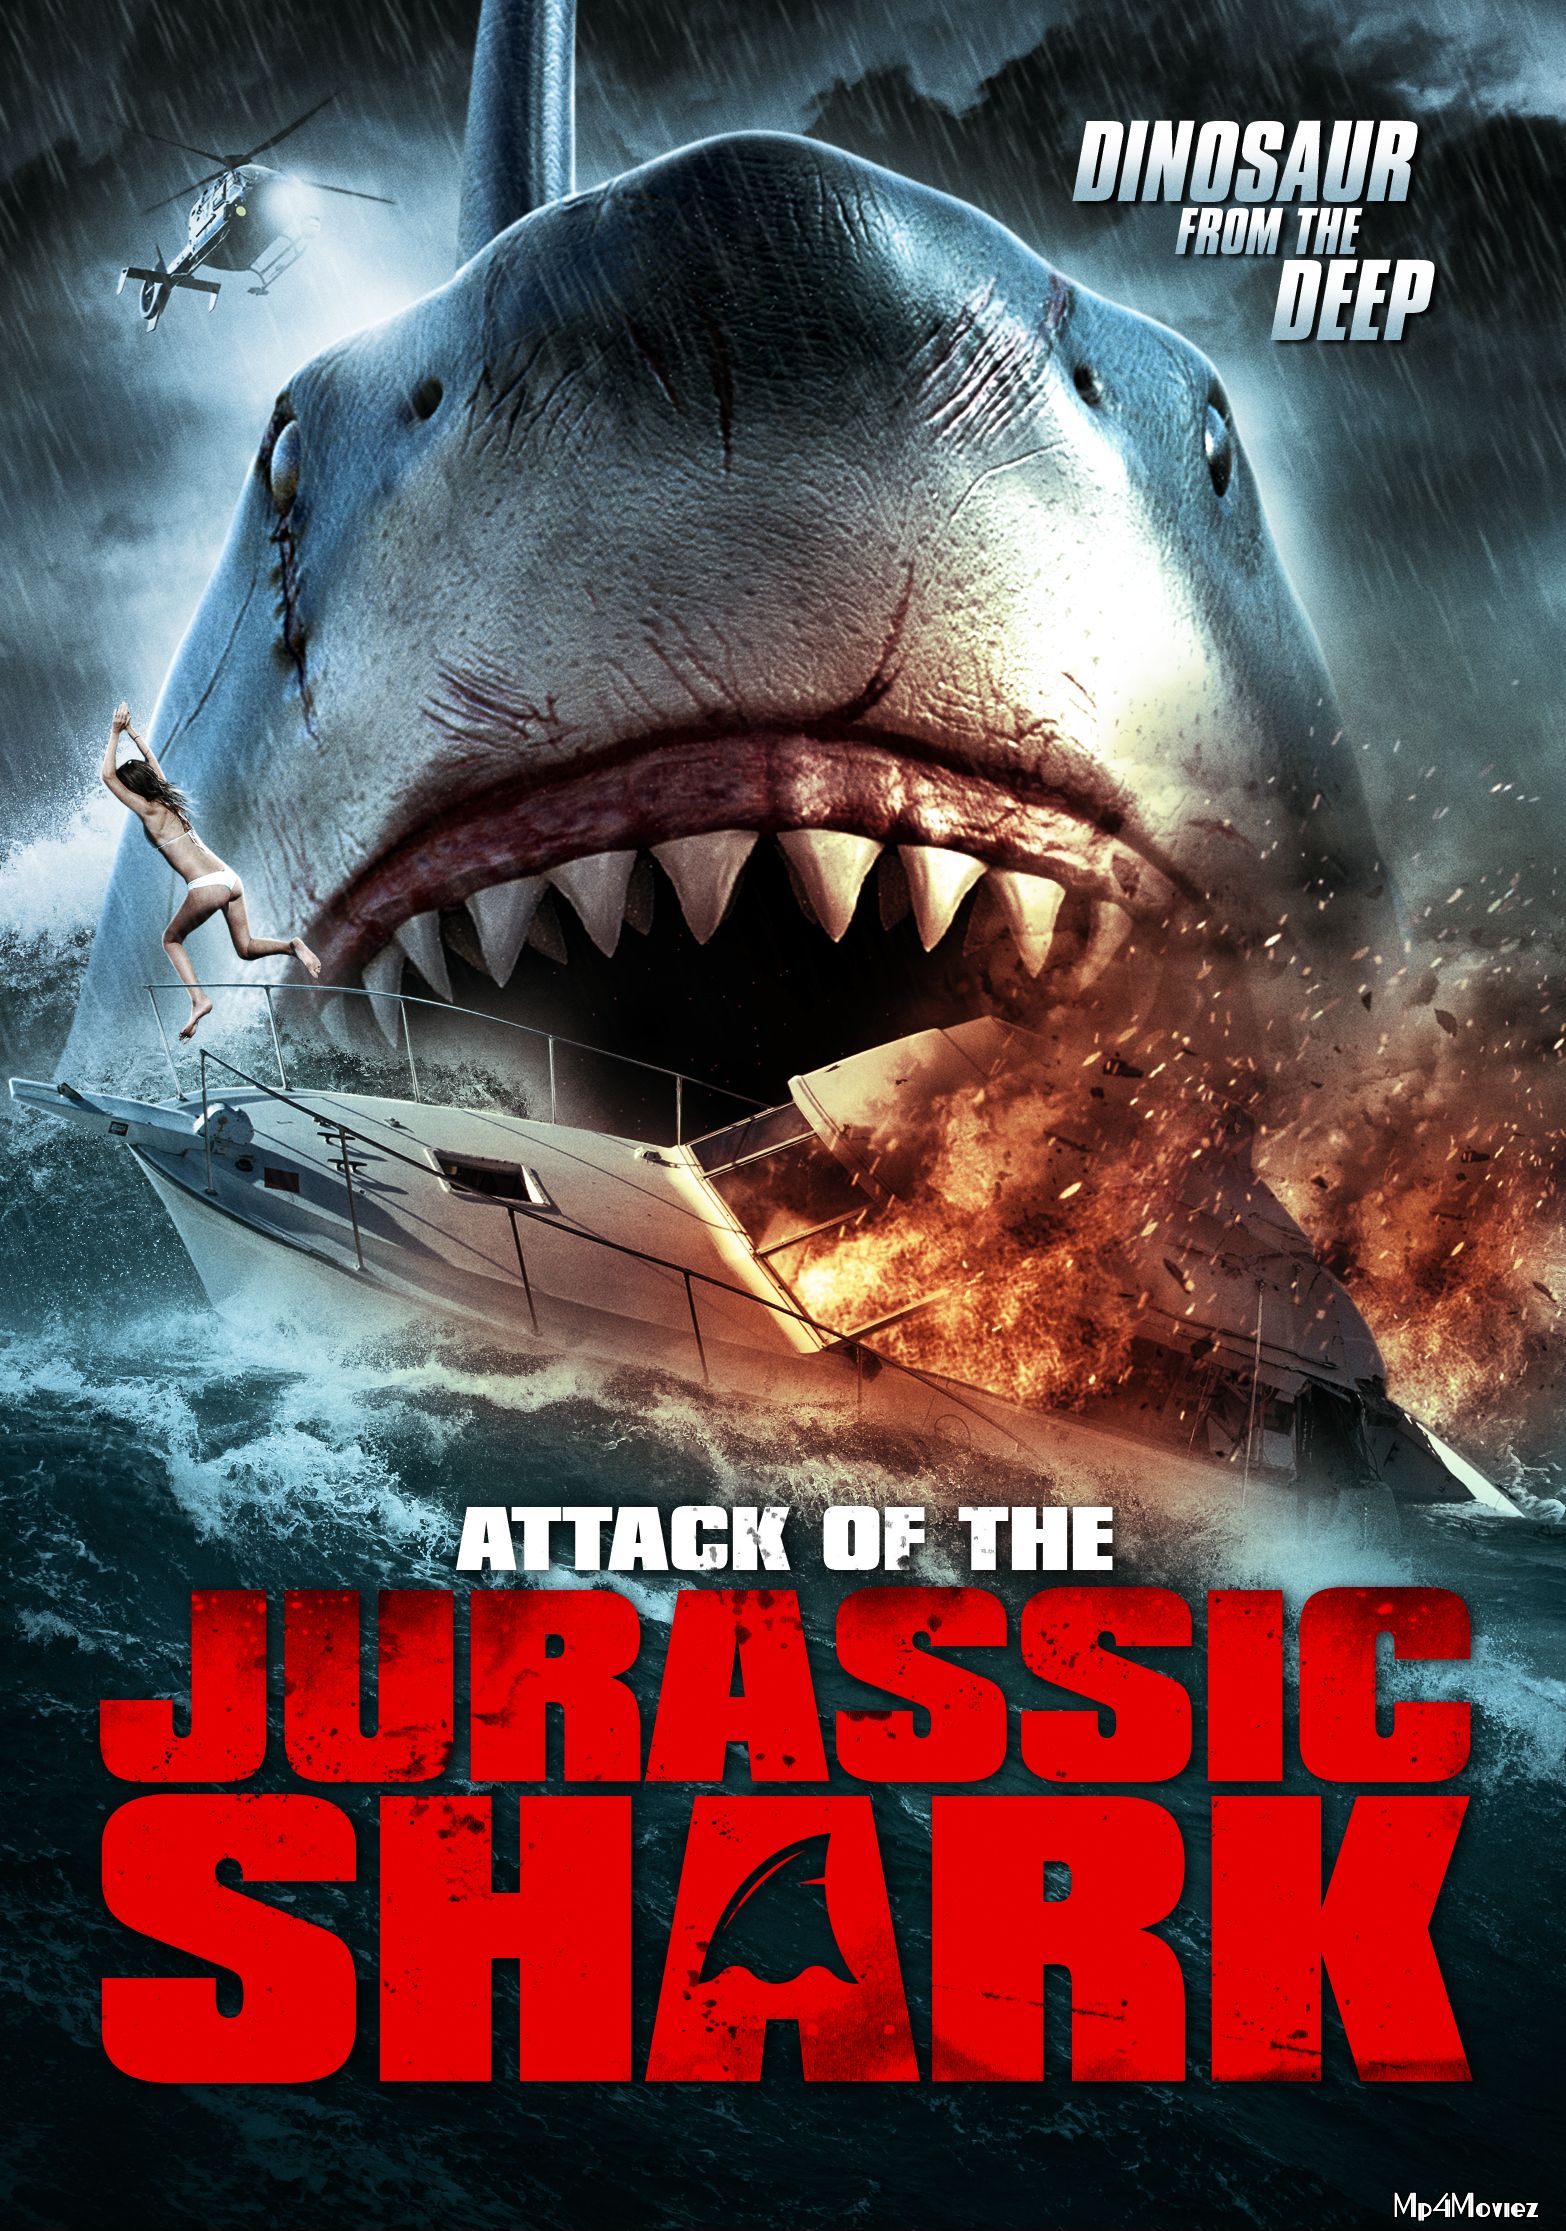 Jurassic Shark 2012 Hindi Dubbed Full Movie download full movie